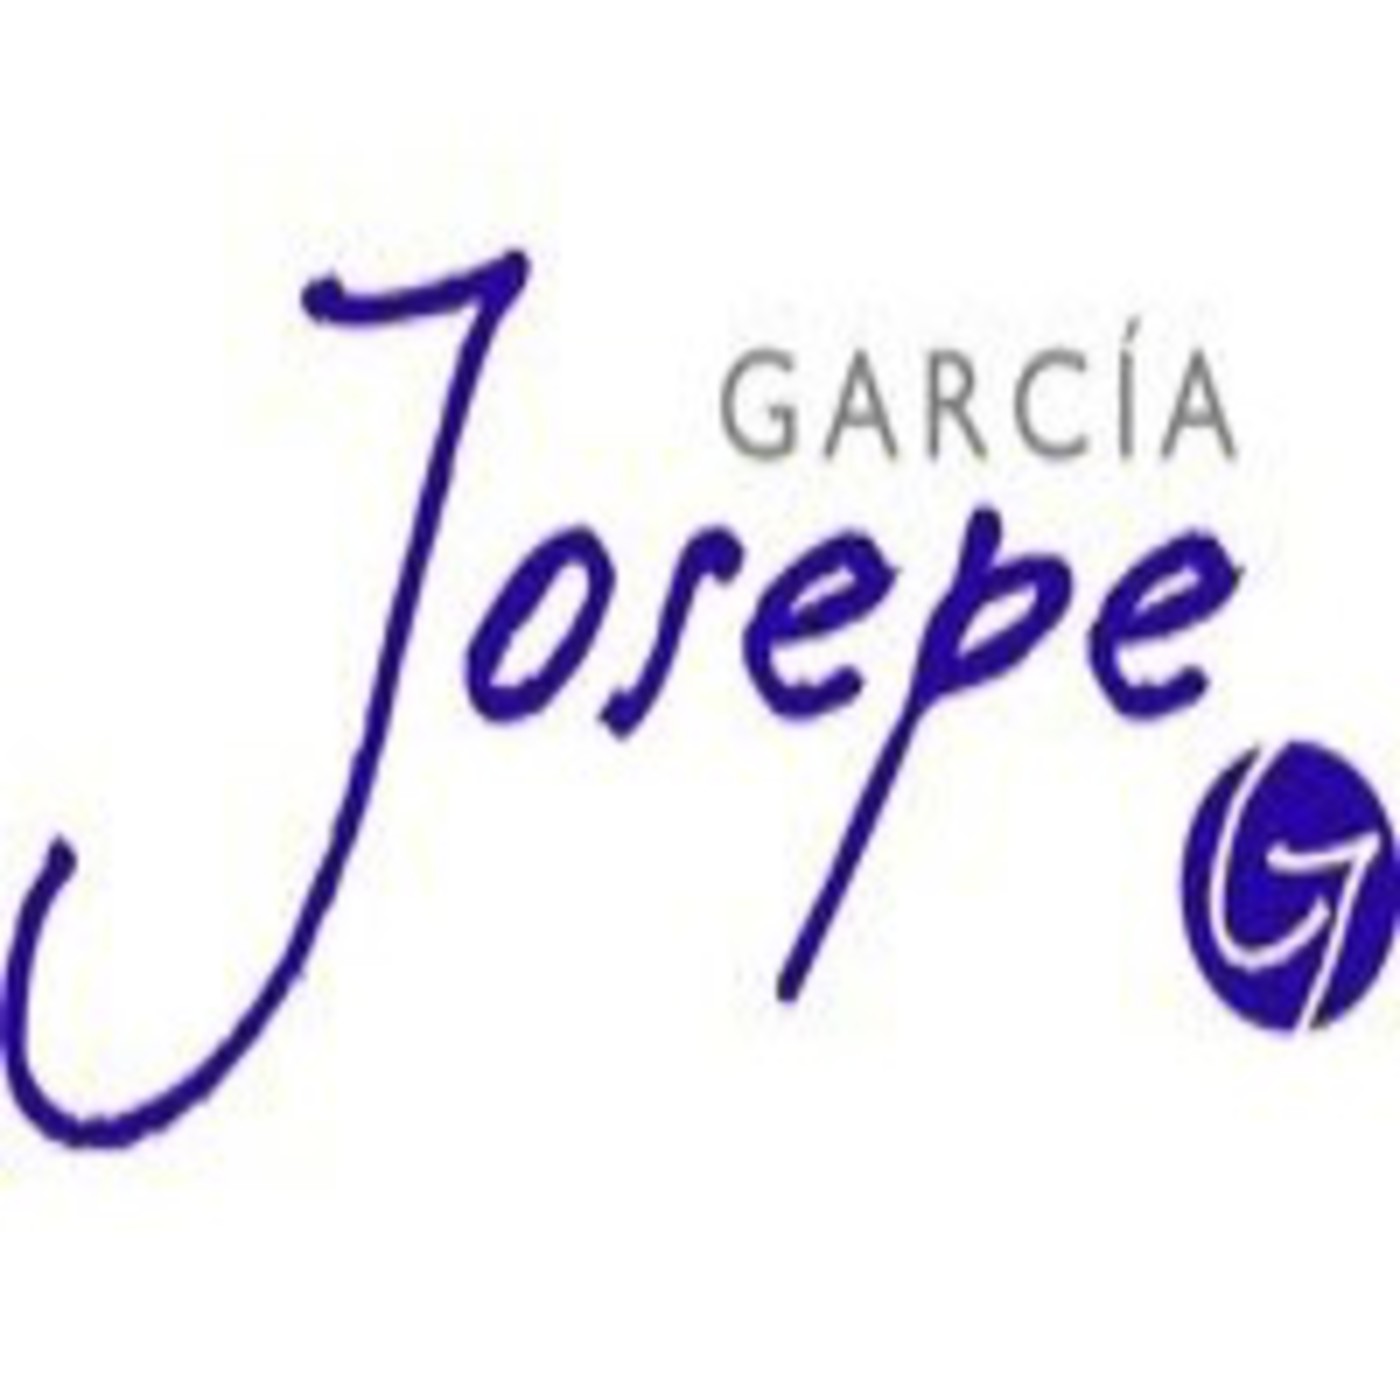 Josepe García